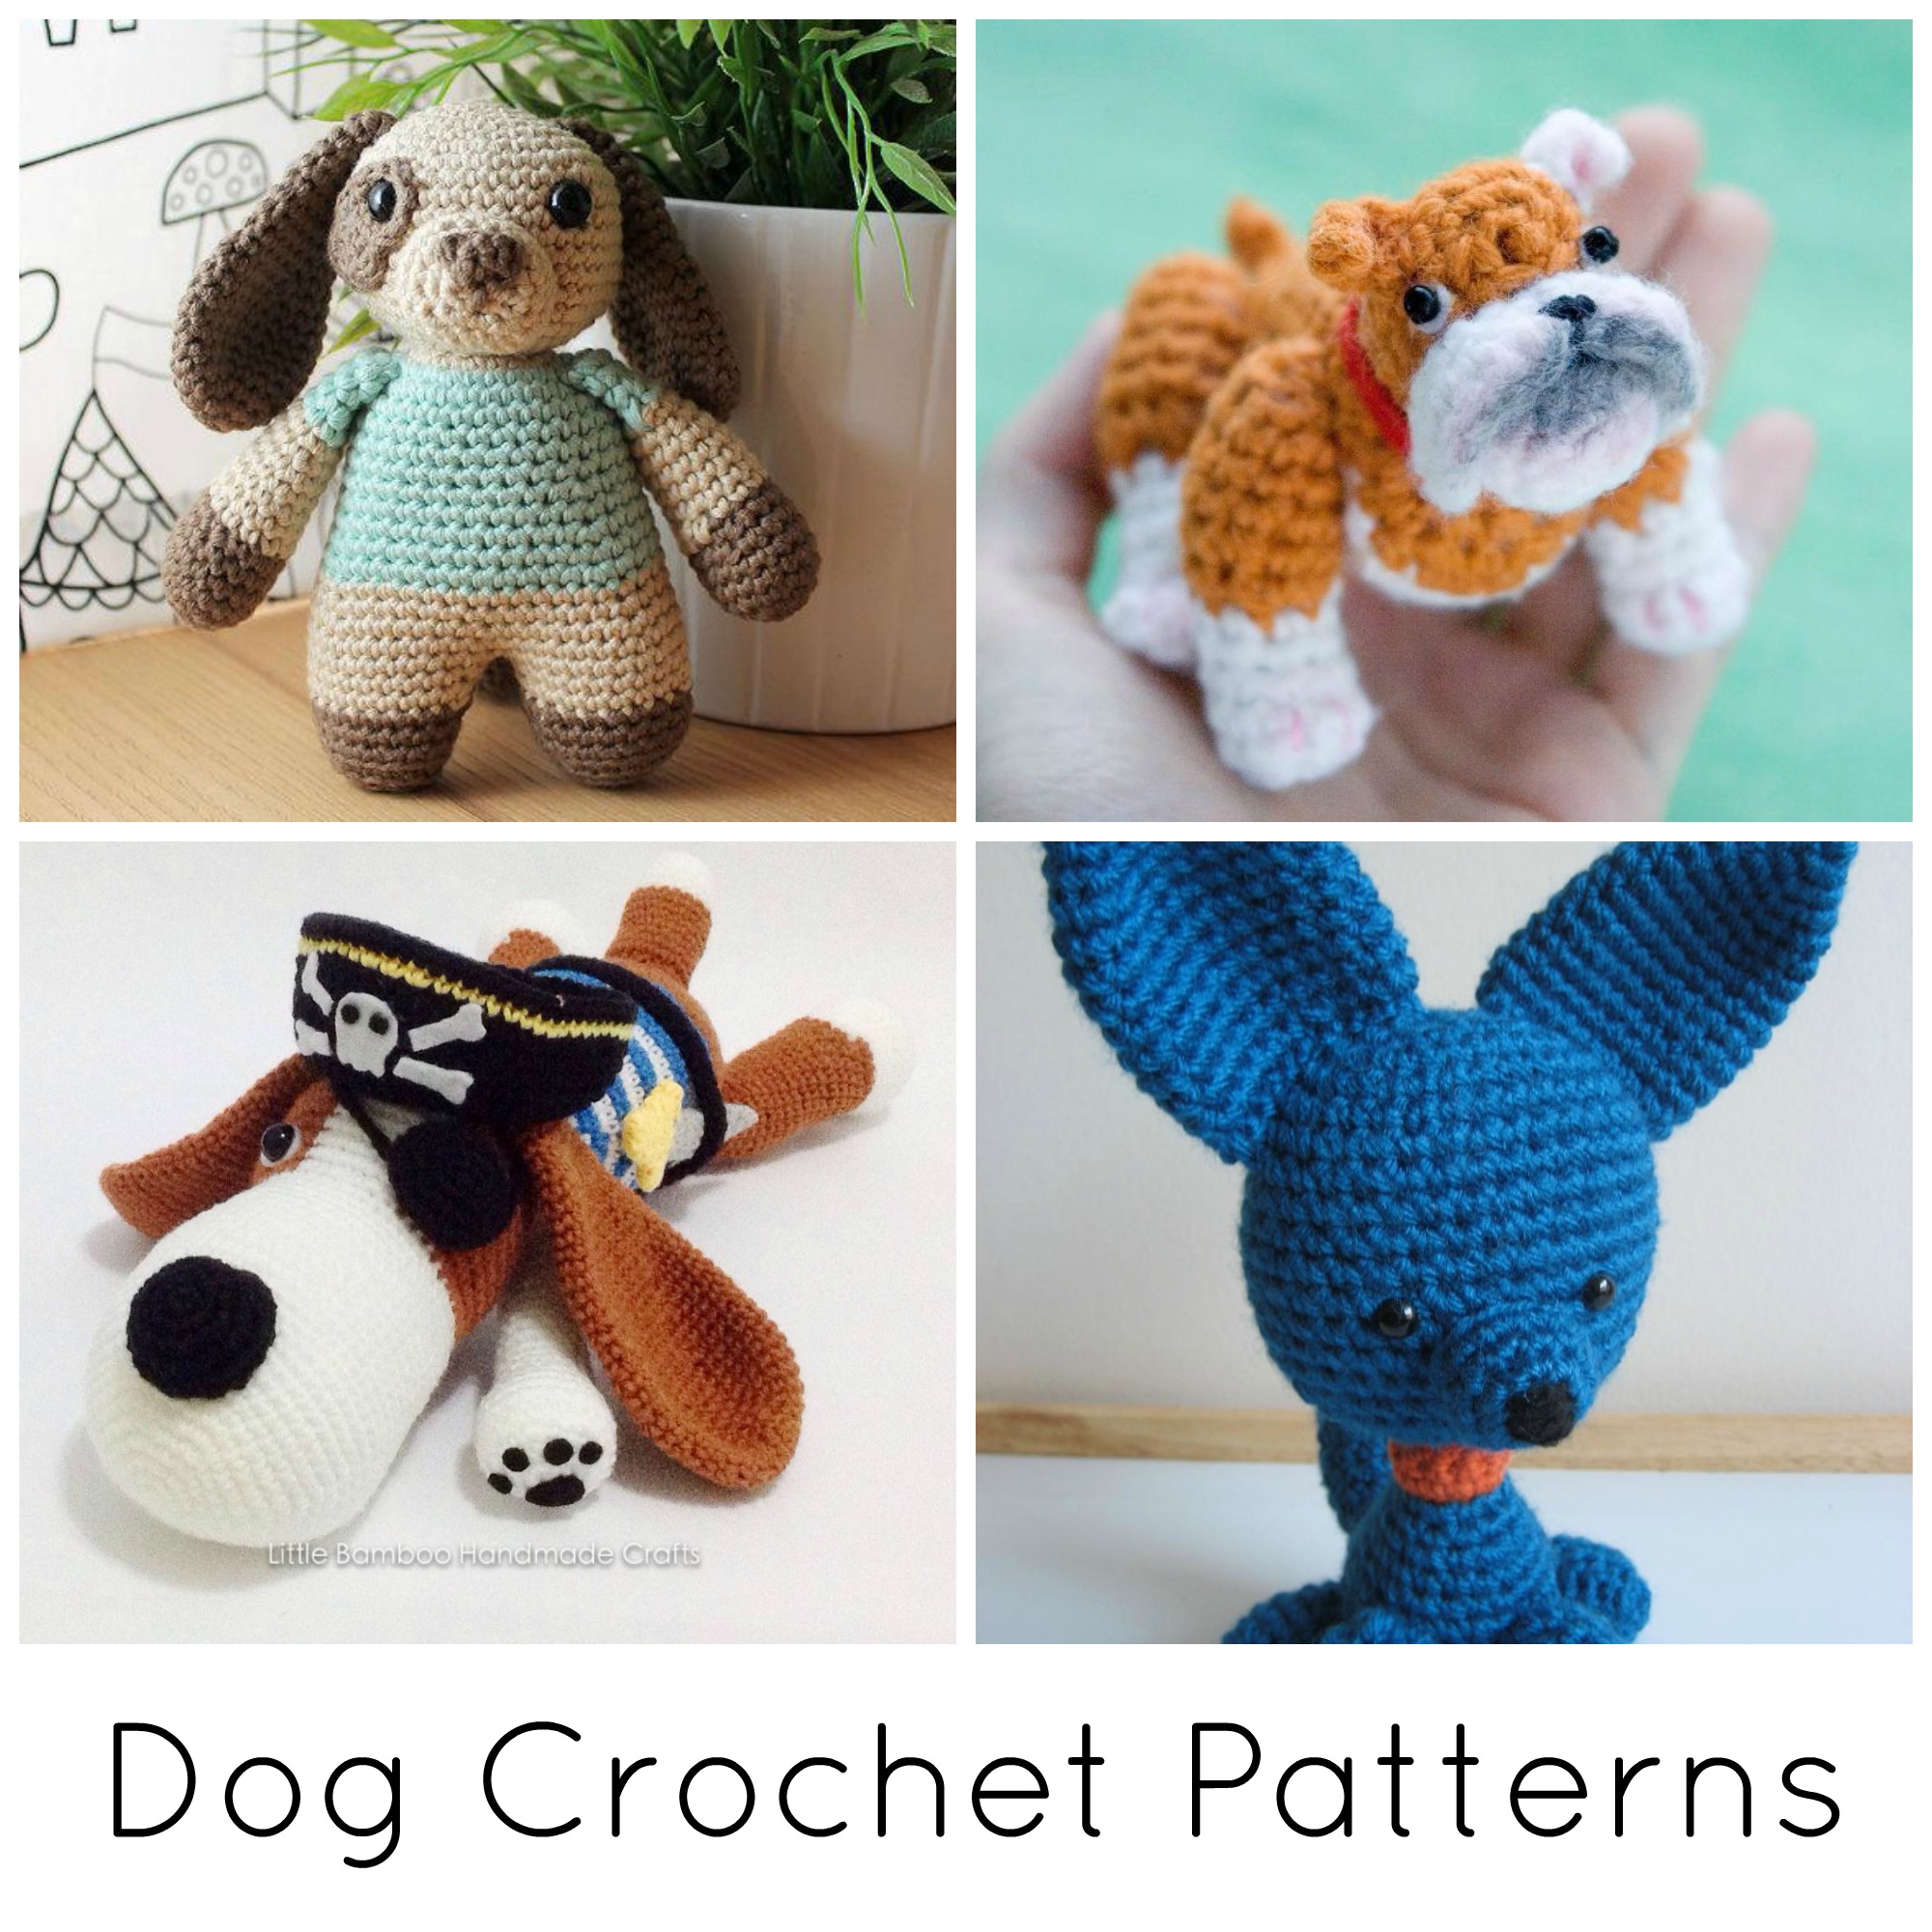 Dog Crochet Patterns